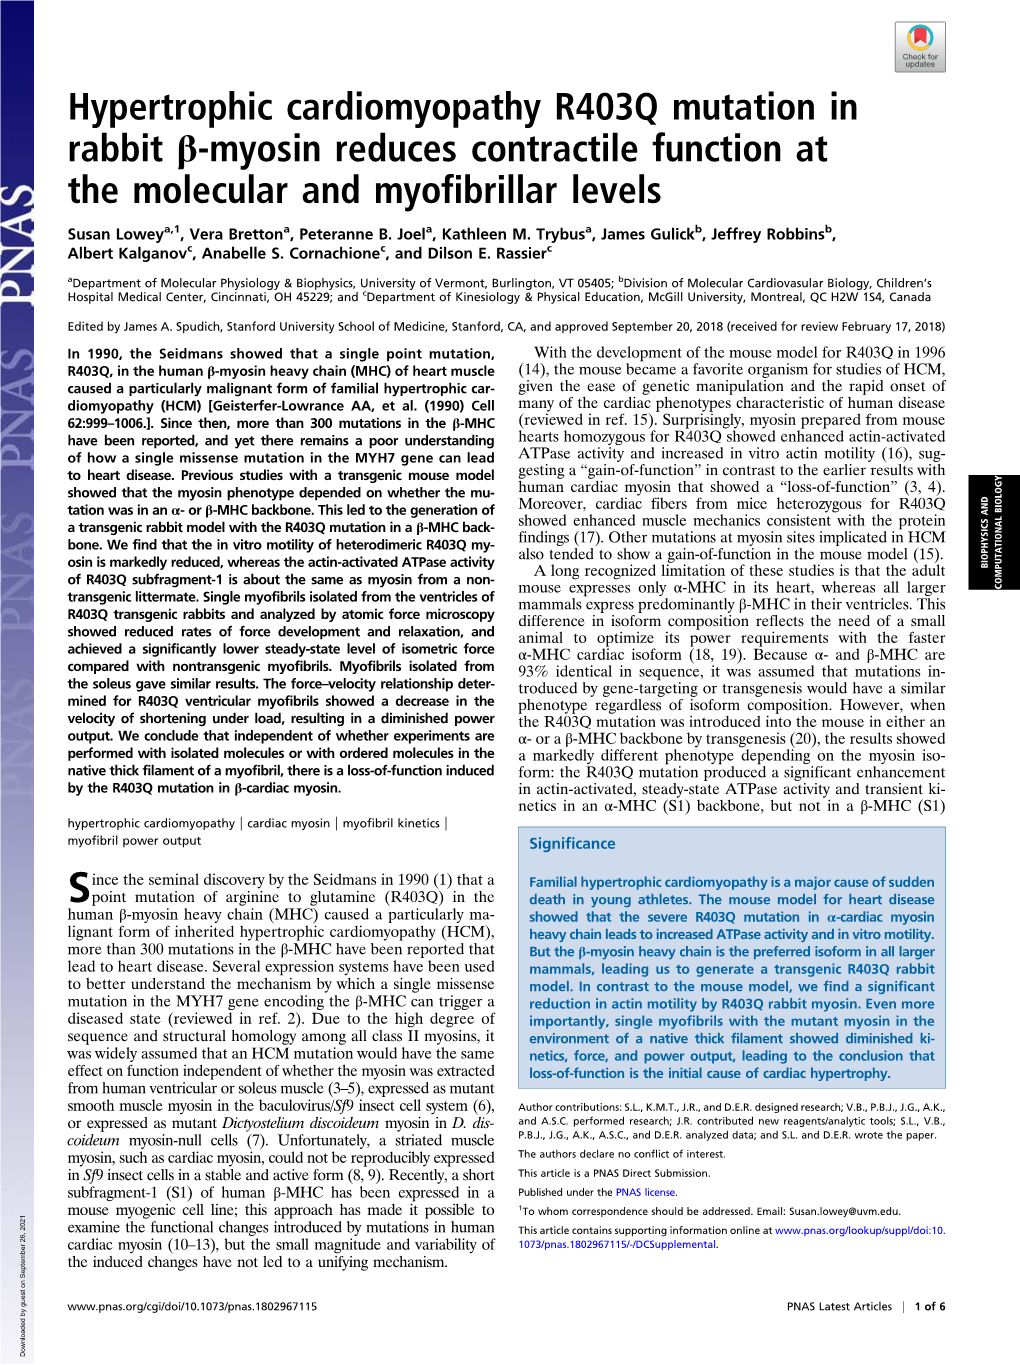 Hypertrophic Cardiomyopathy R403Q Mutation in Rabbit Β-Myosin Reduces Contractile Function at the Molecular and Myofibrillar Levels